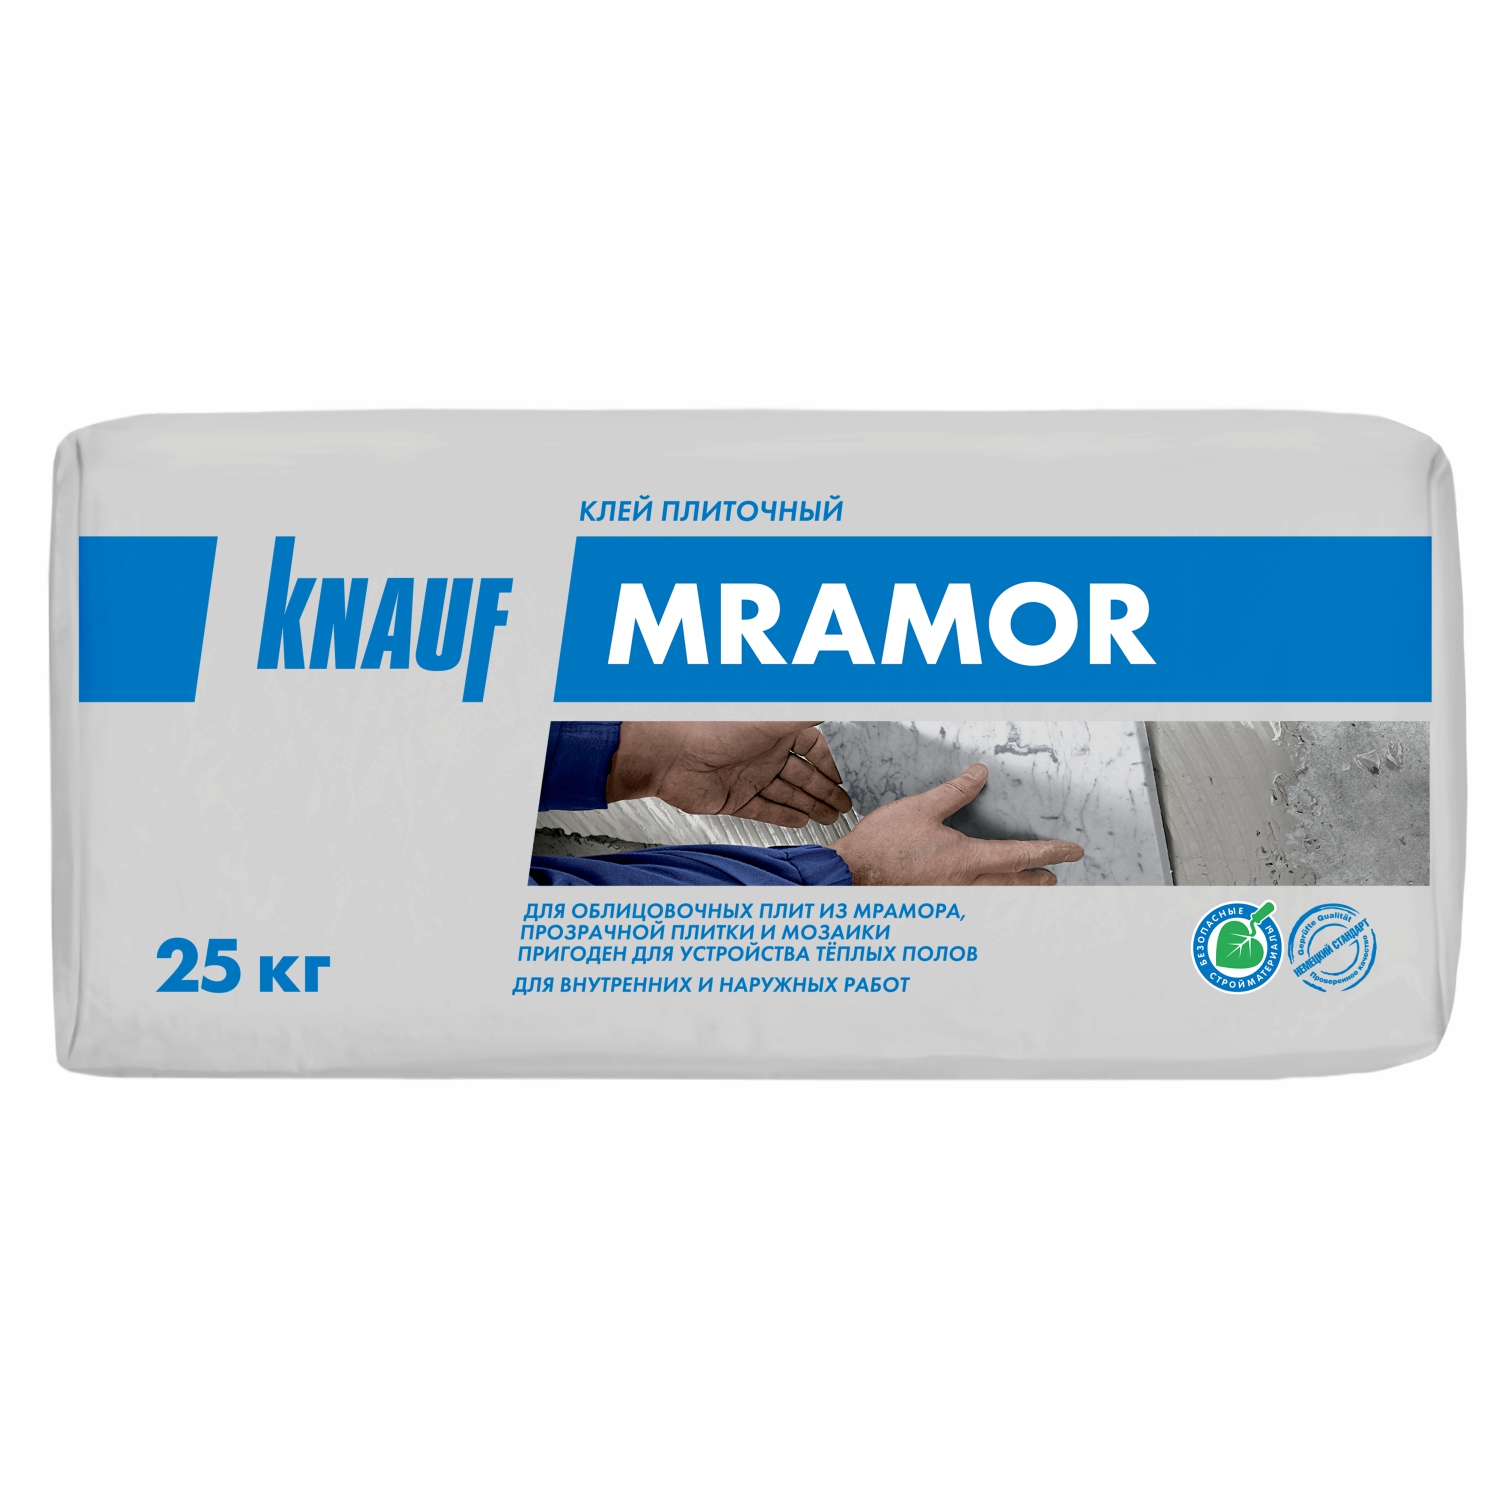 Клей плиточный Knauf Mramor (Мрамор), белый, 25 кг 